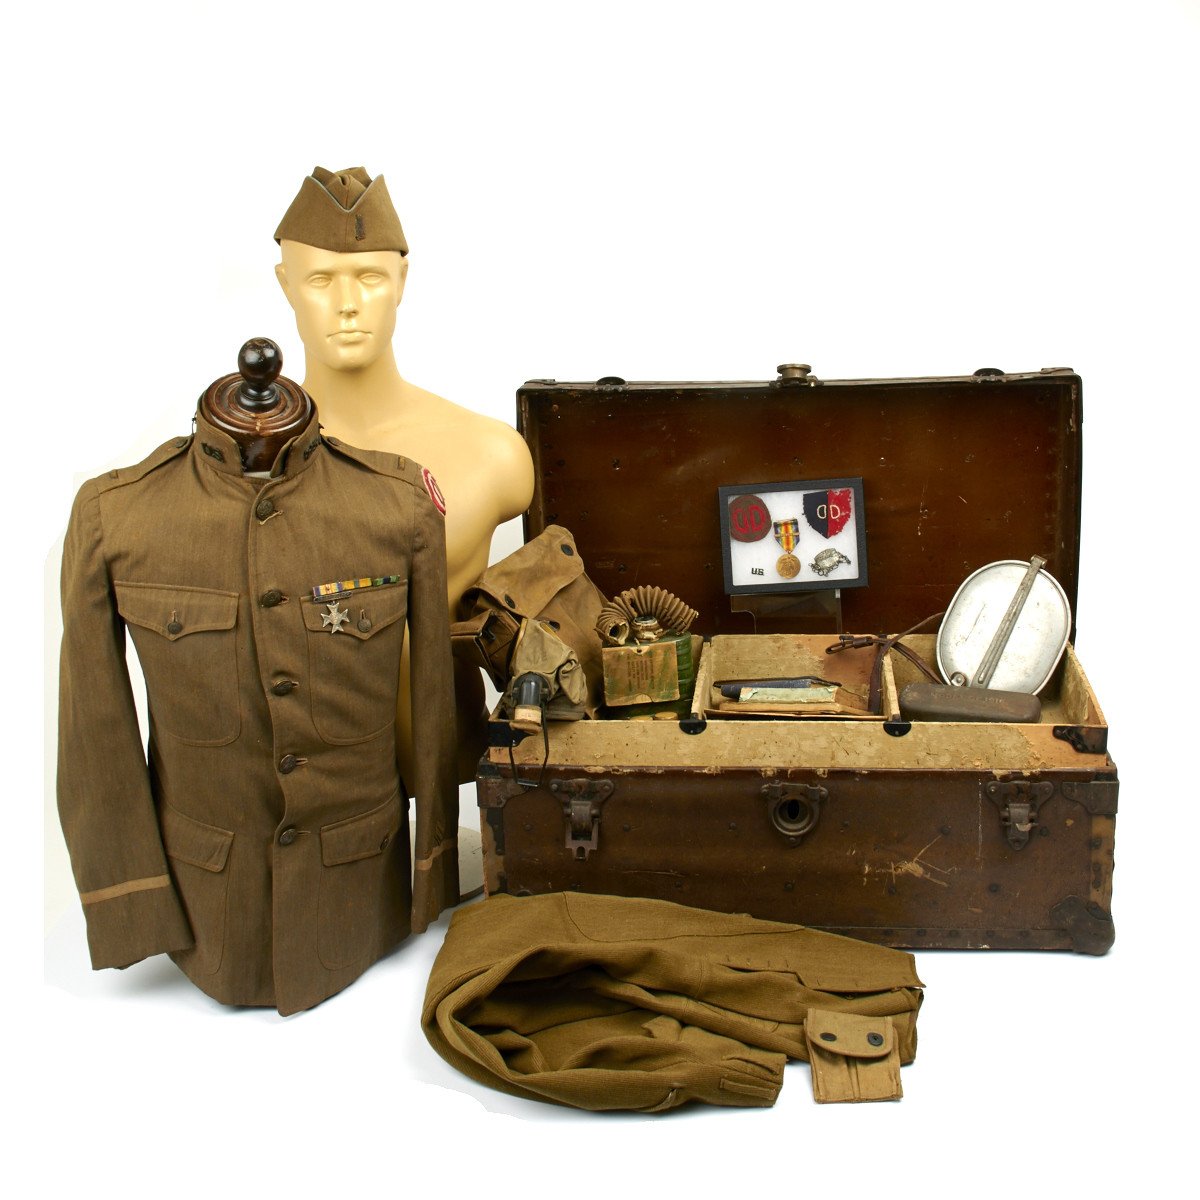 1943 Auburn Academy WWII USA military foot locker box - Miscellaneous Items  - Danielsville, Pennsylvania, Facebook Marketplace